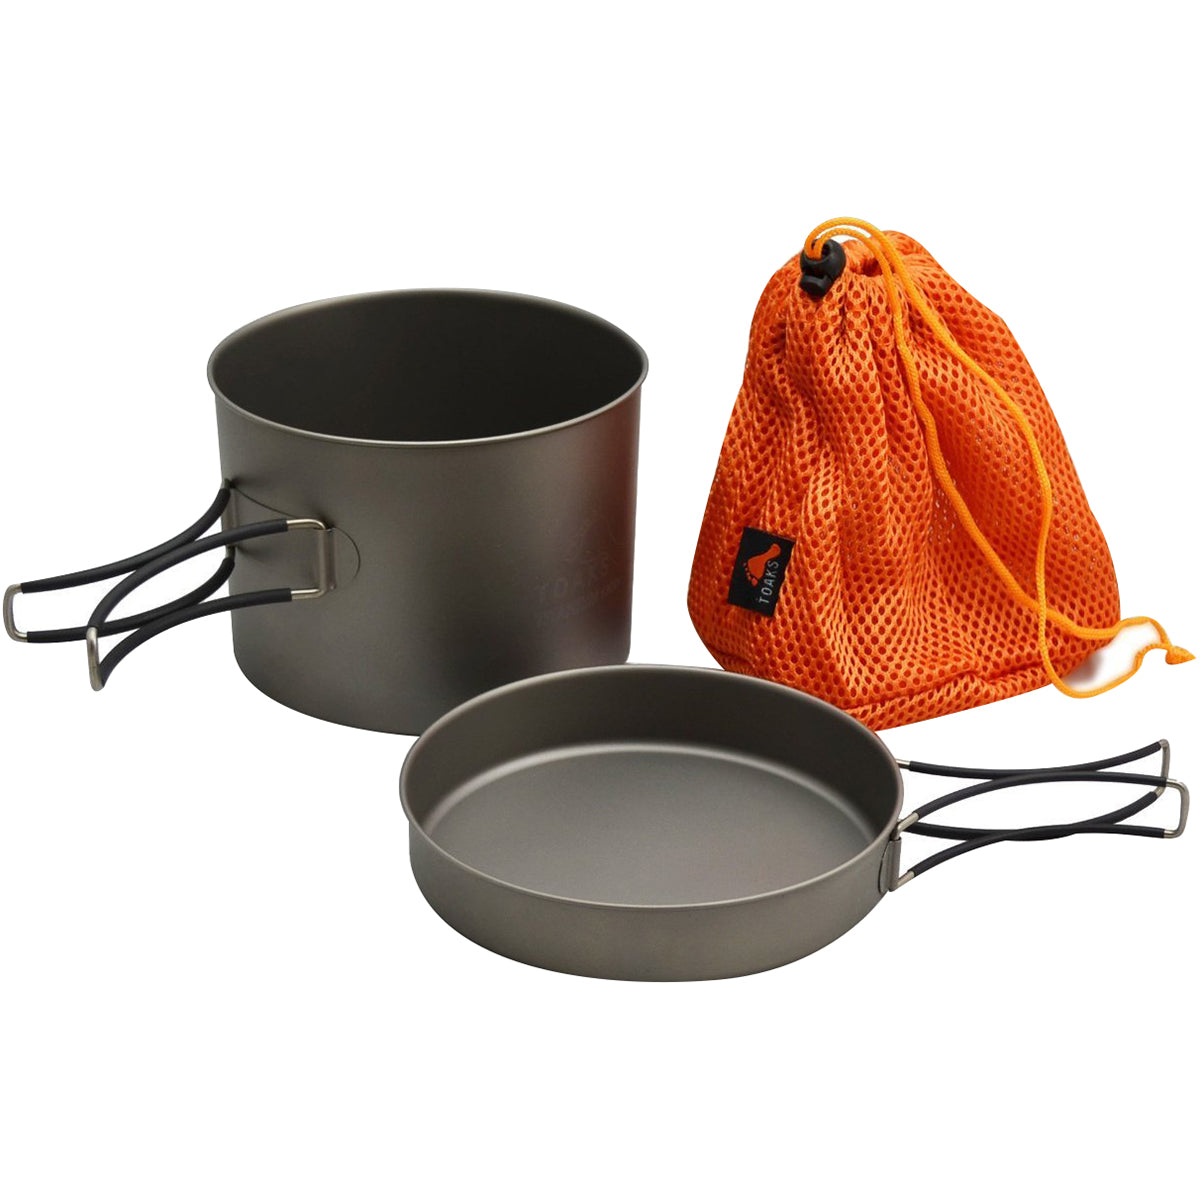 TOAKS Titanium Outdoor Camping Cook Pot with Pan and Foldable Handles - 1300ml TOAKS